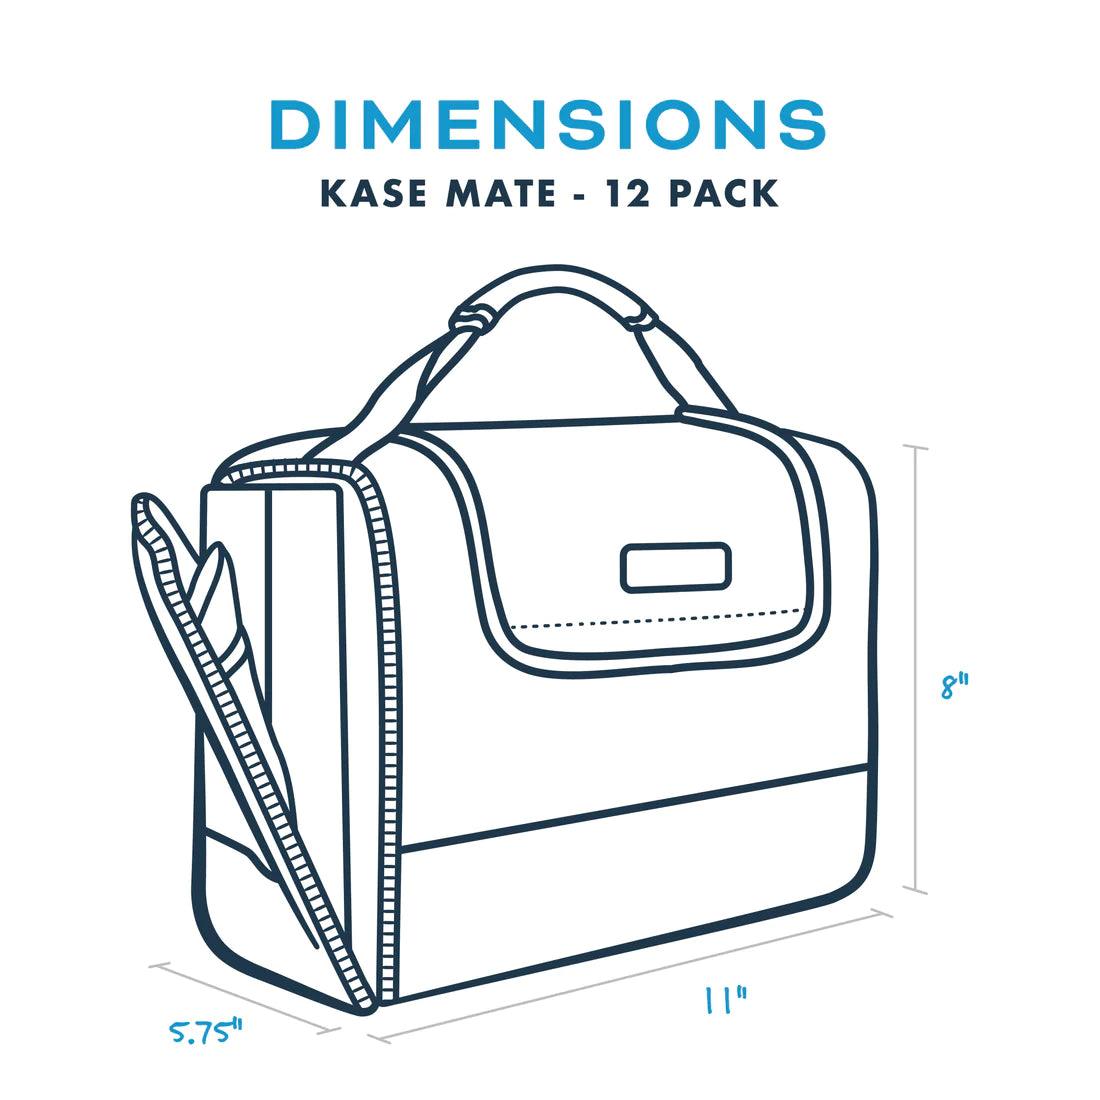 Dimensions of Kanga Kase 5.75" x 11" x 8"